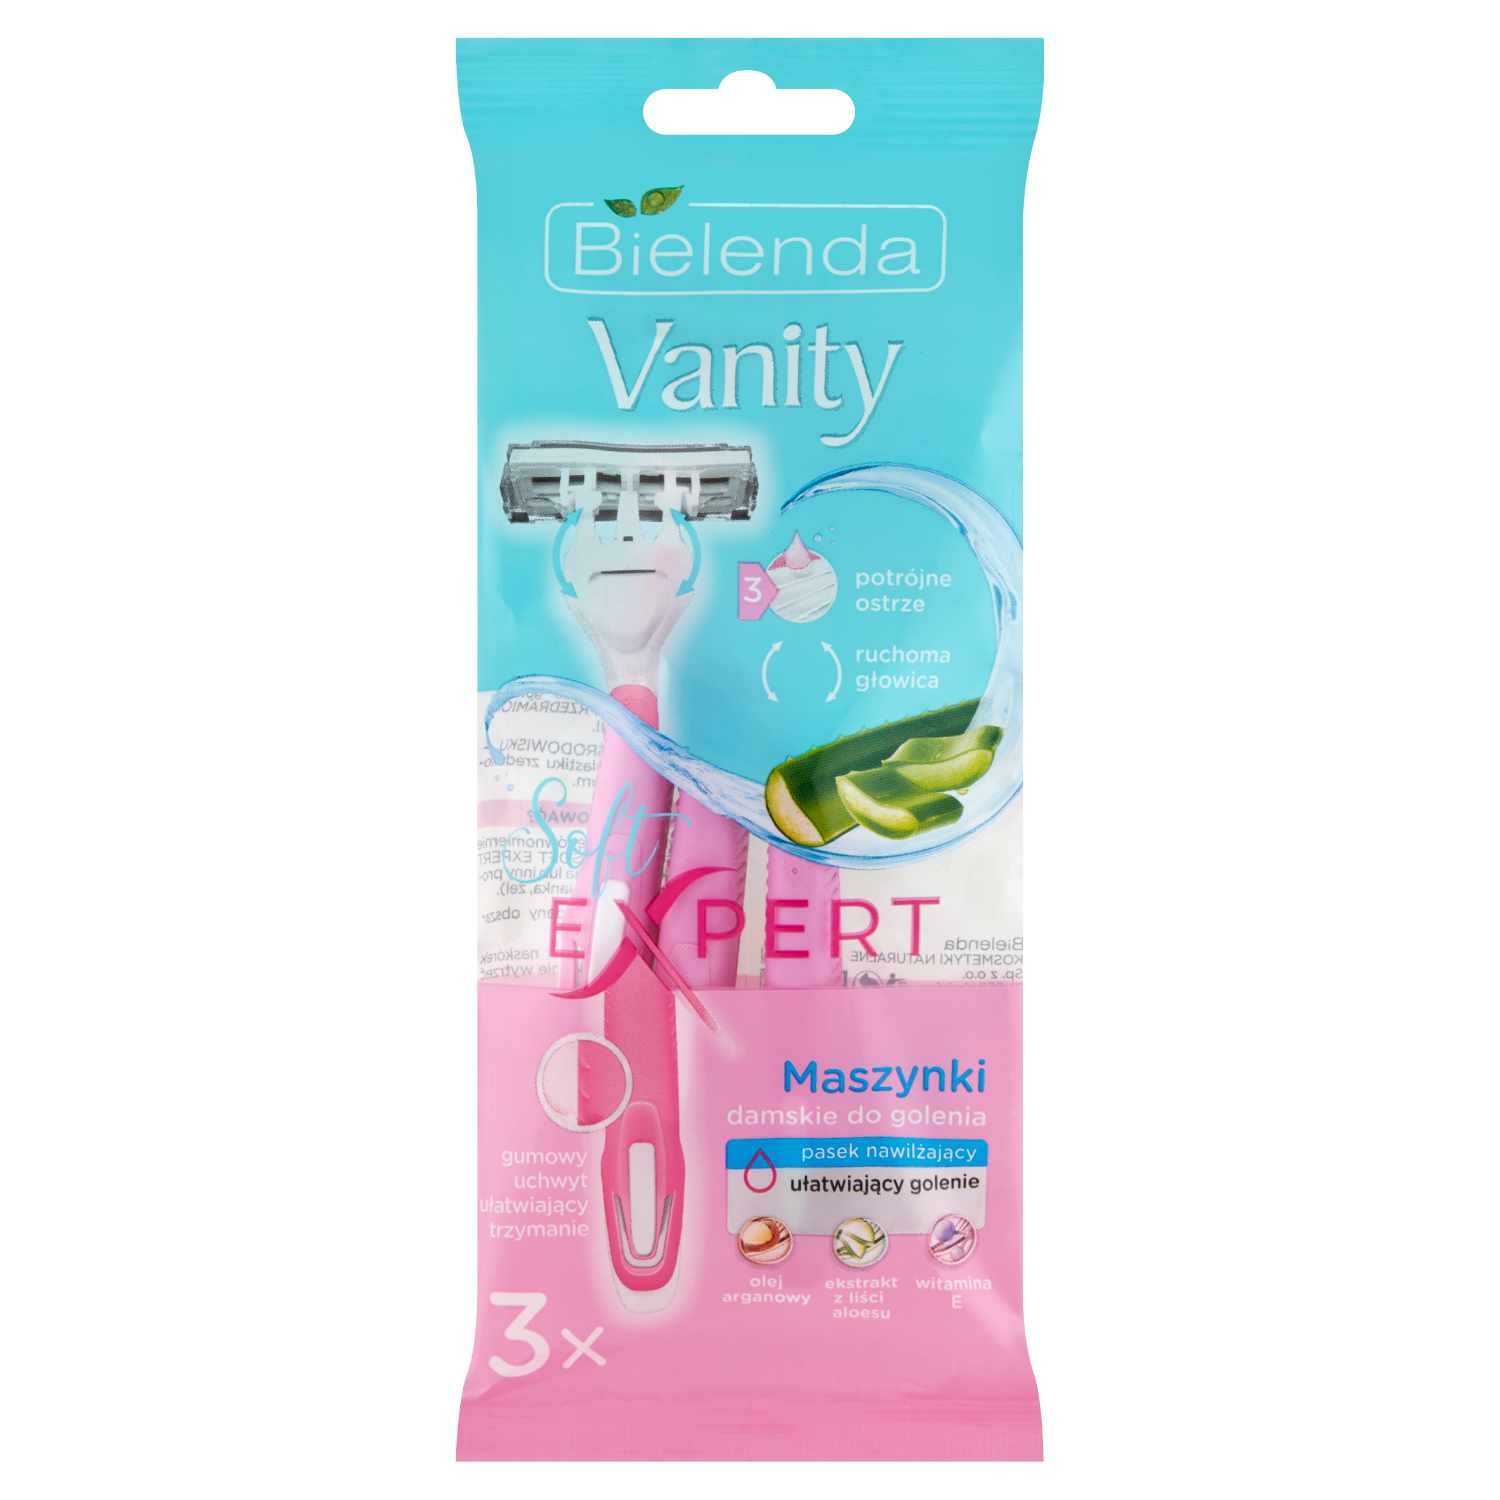 Bielenda Vanity Soft Expert бритвы, 3 шт/1 упаковка